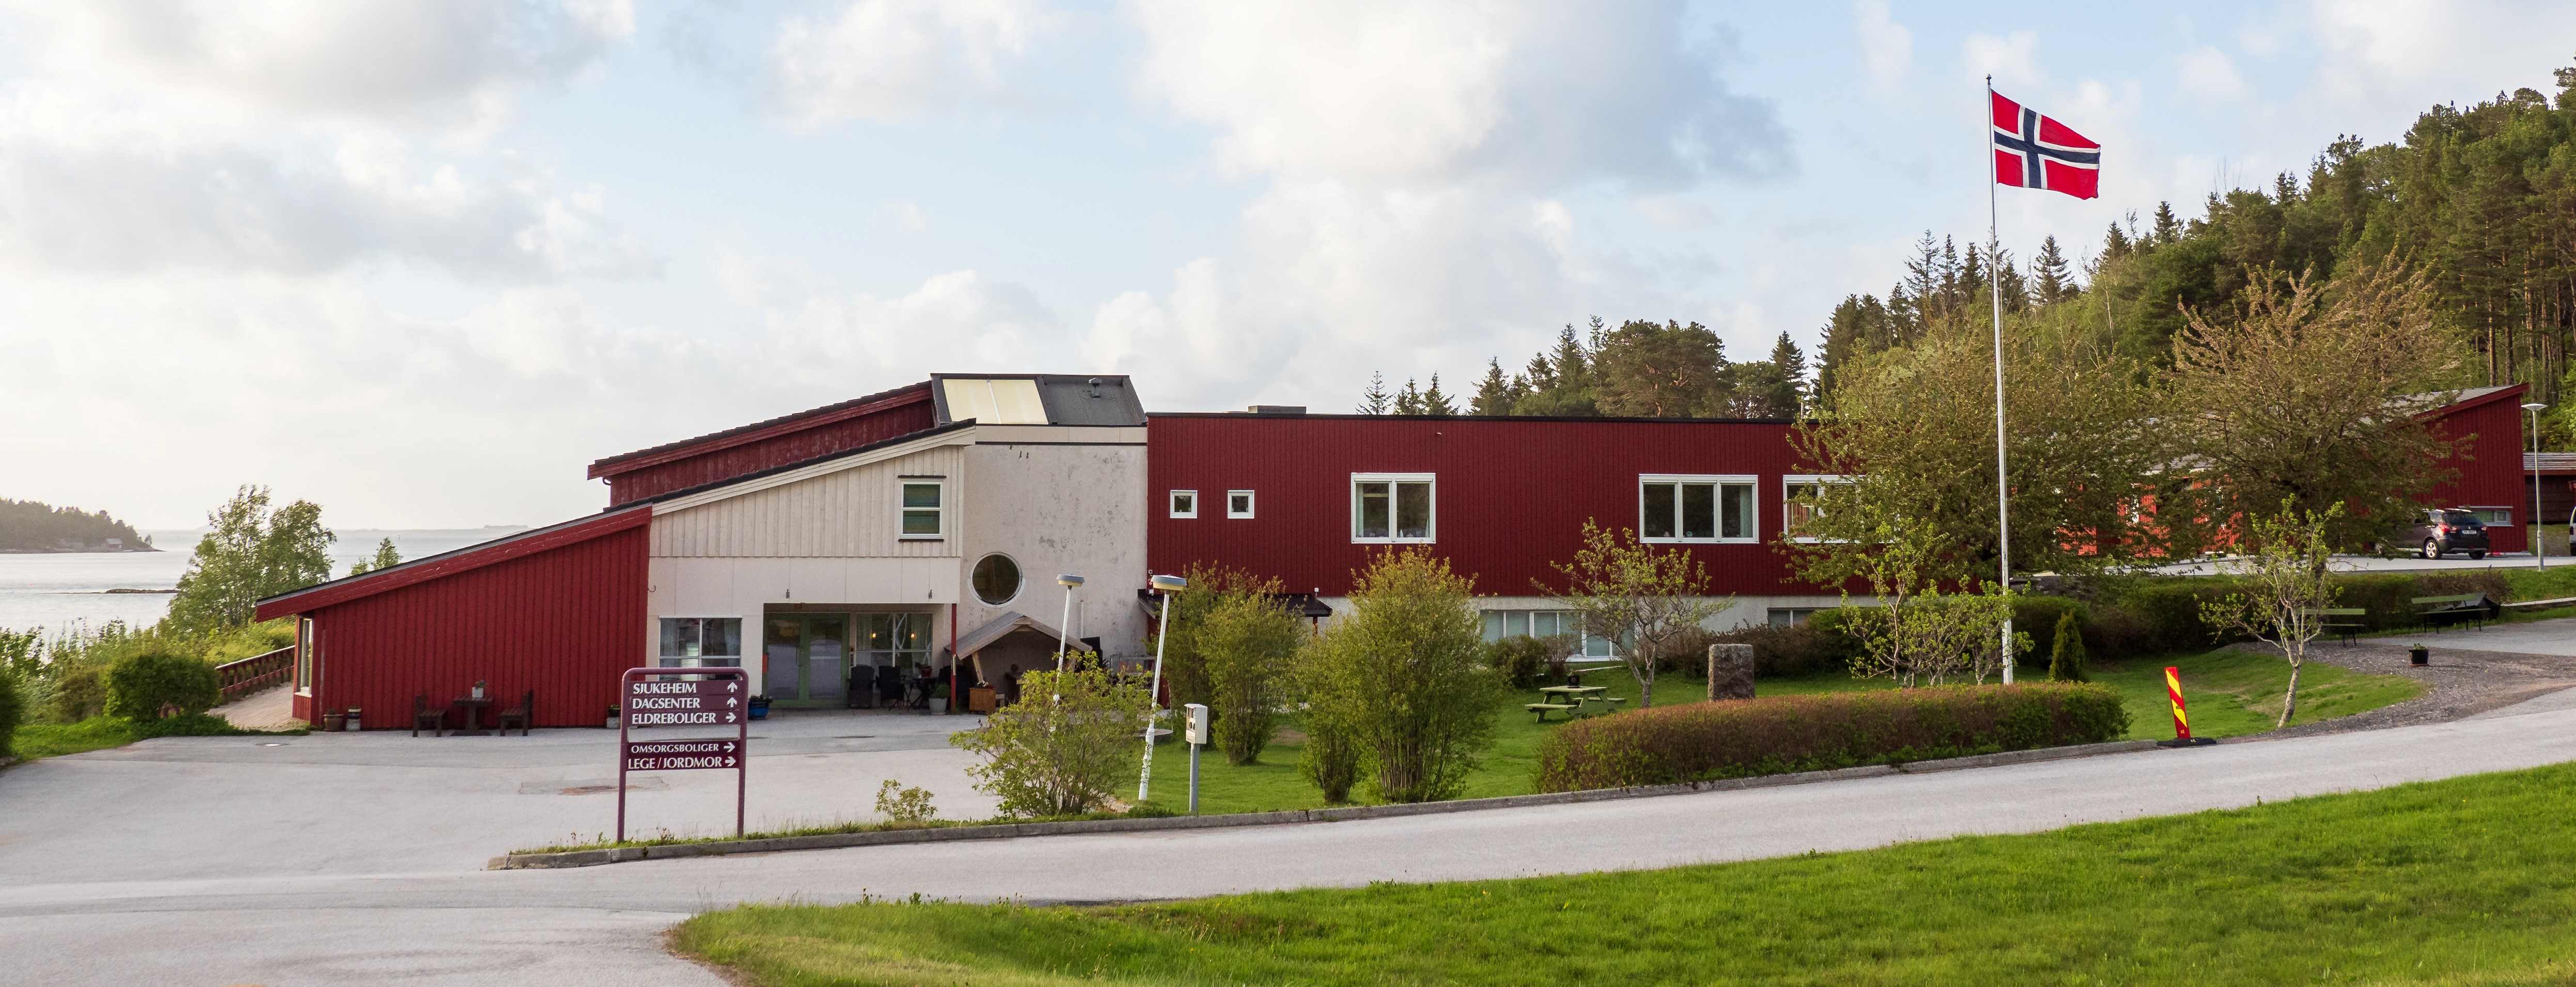 Aure kommune Hjemmetjenesten Tustna